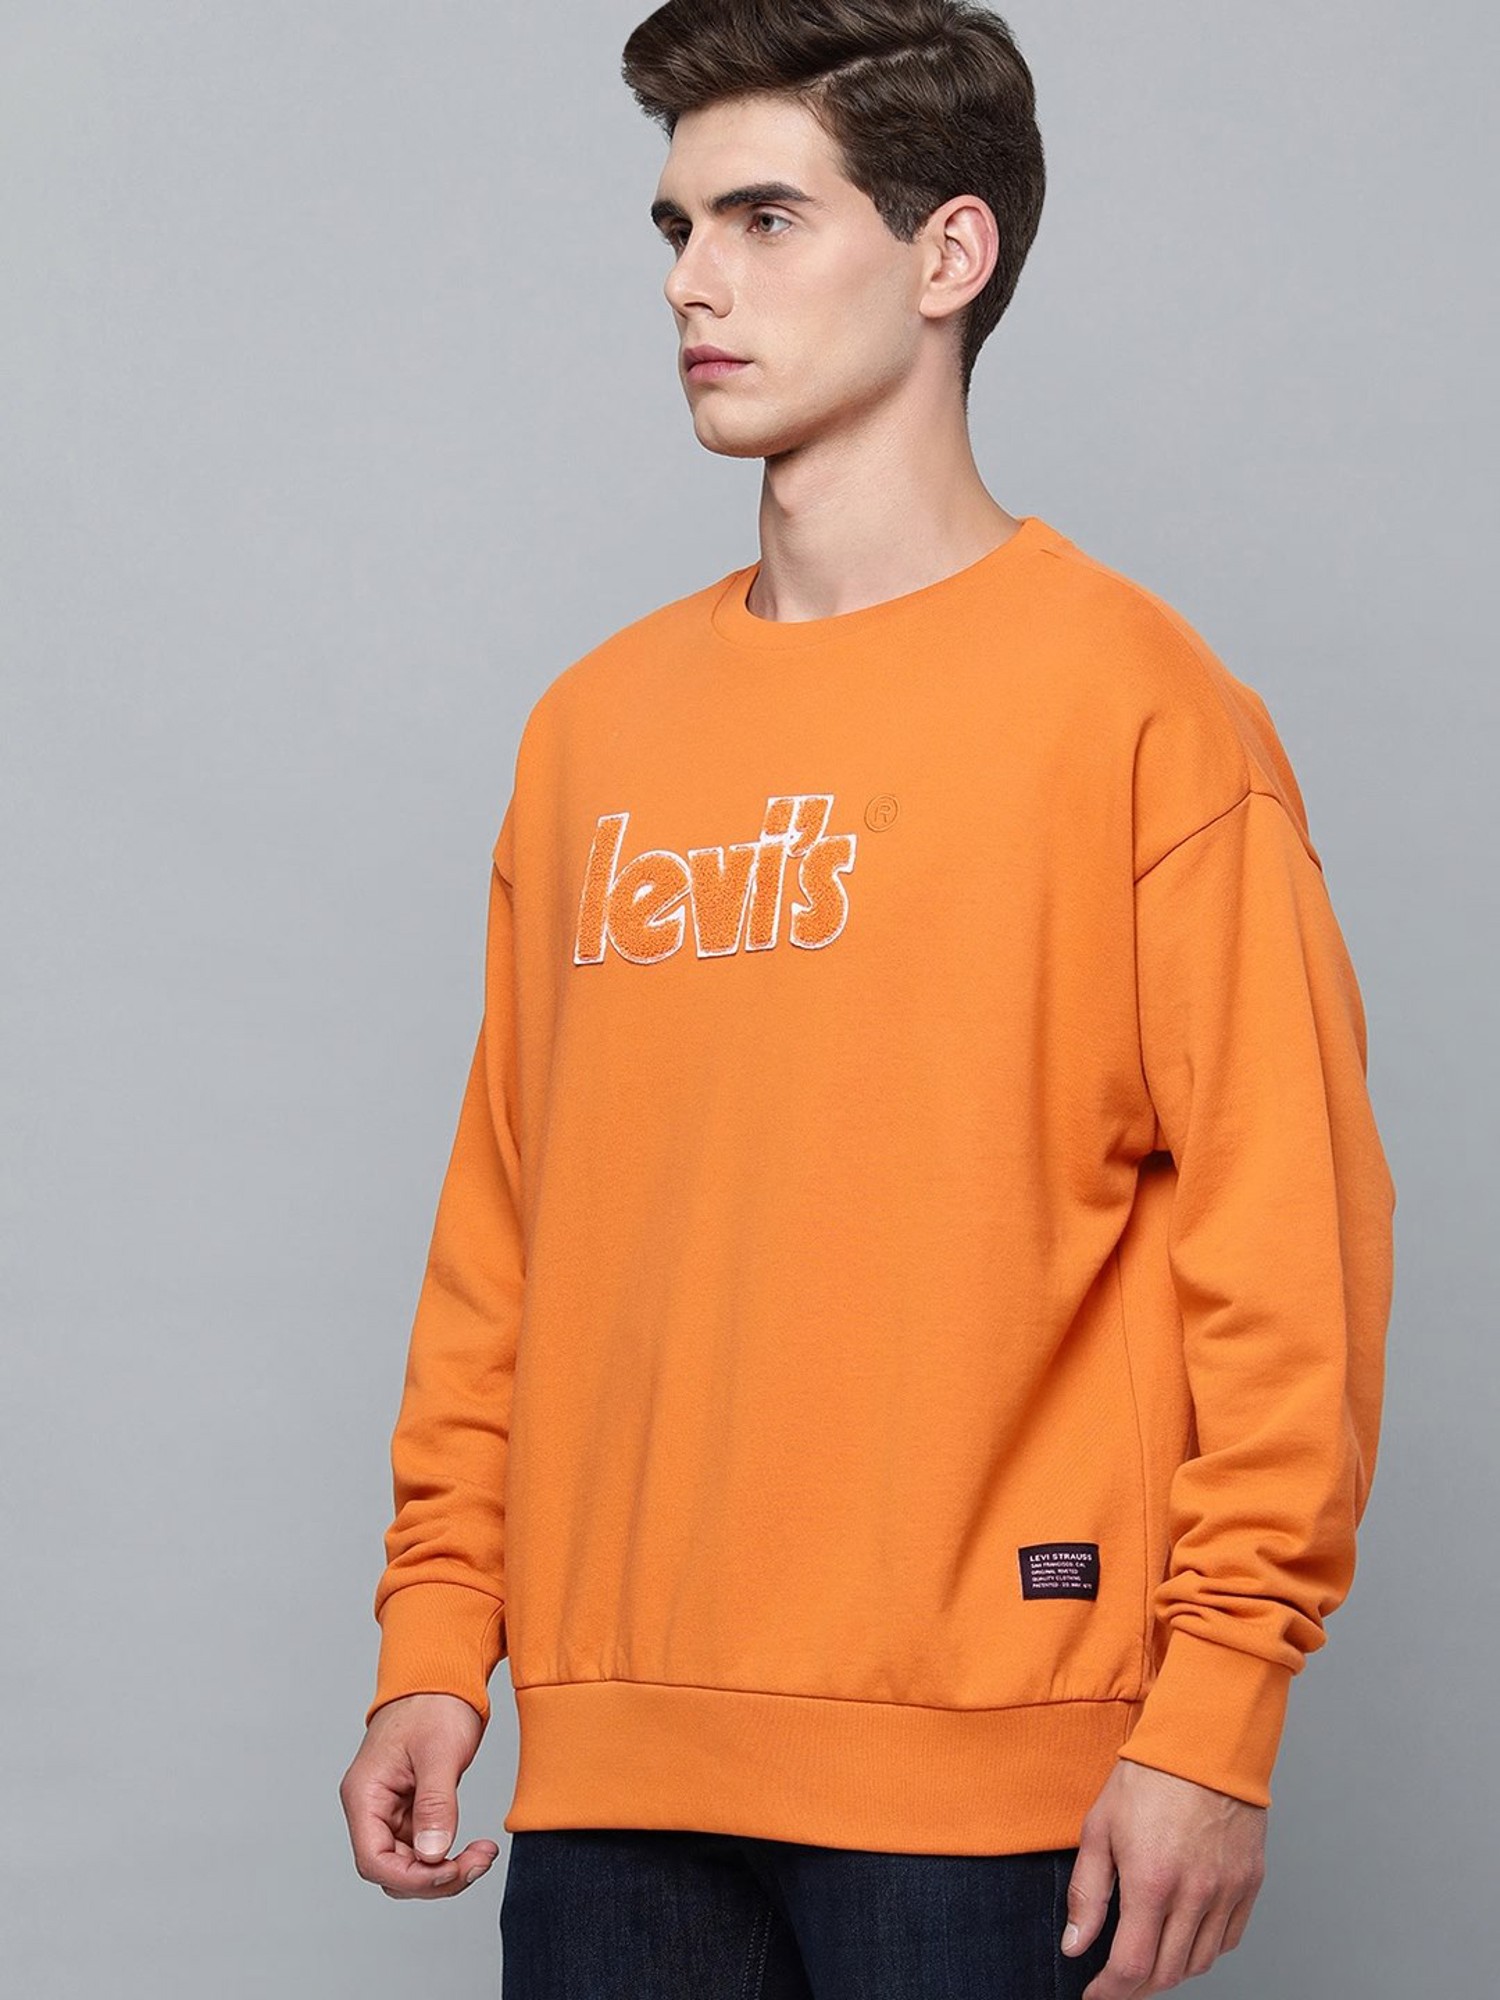 Buy Levi's Orange Printed Sweatshirt for Men Online @ Tata CLiQ